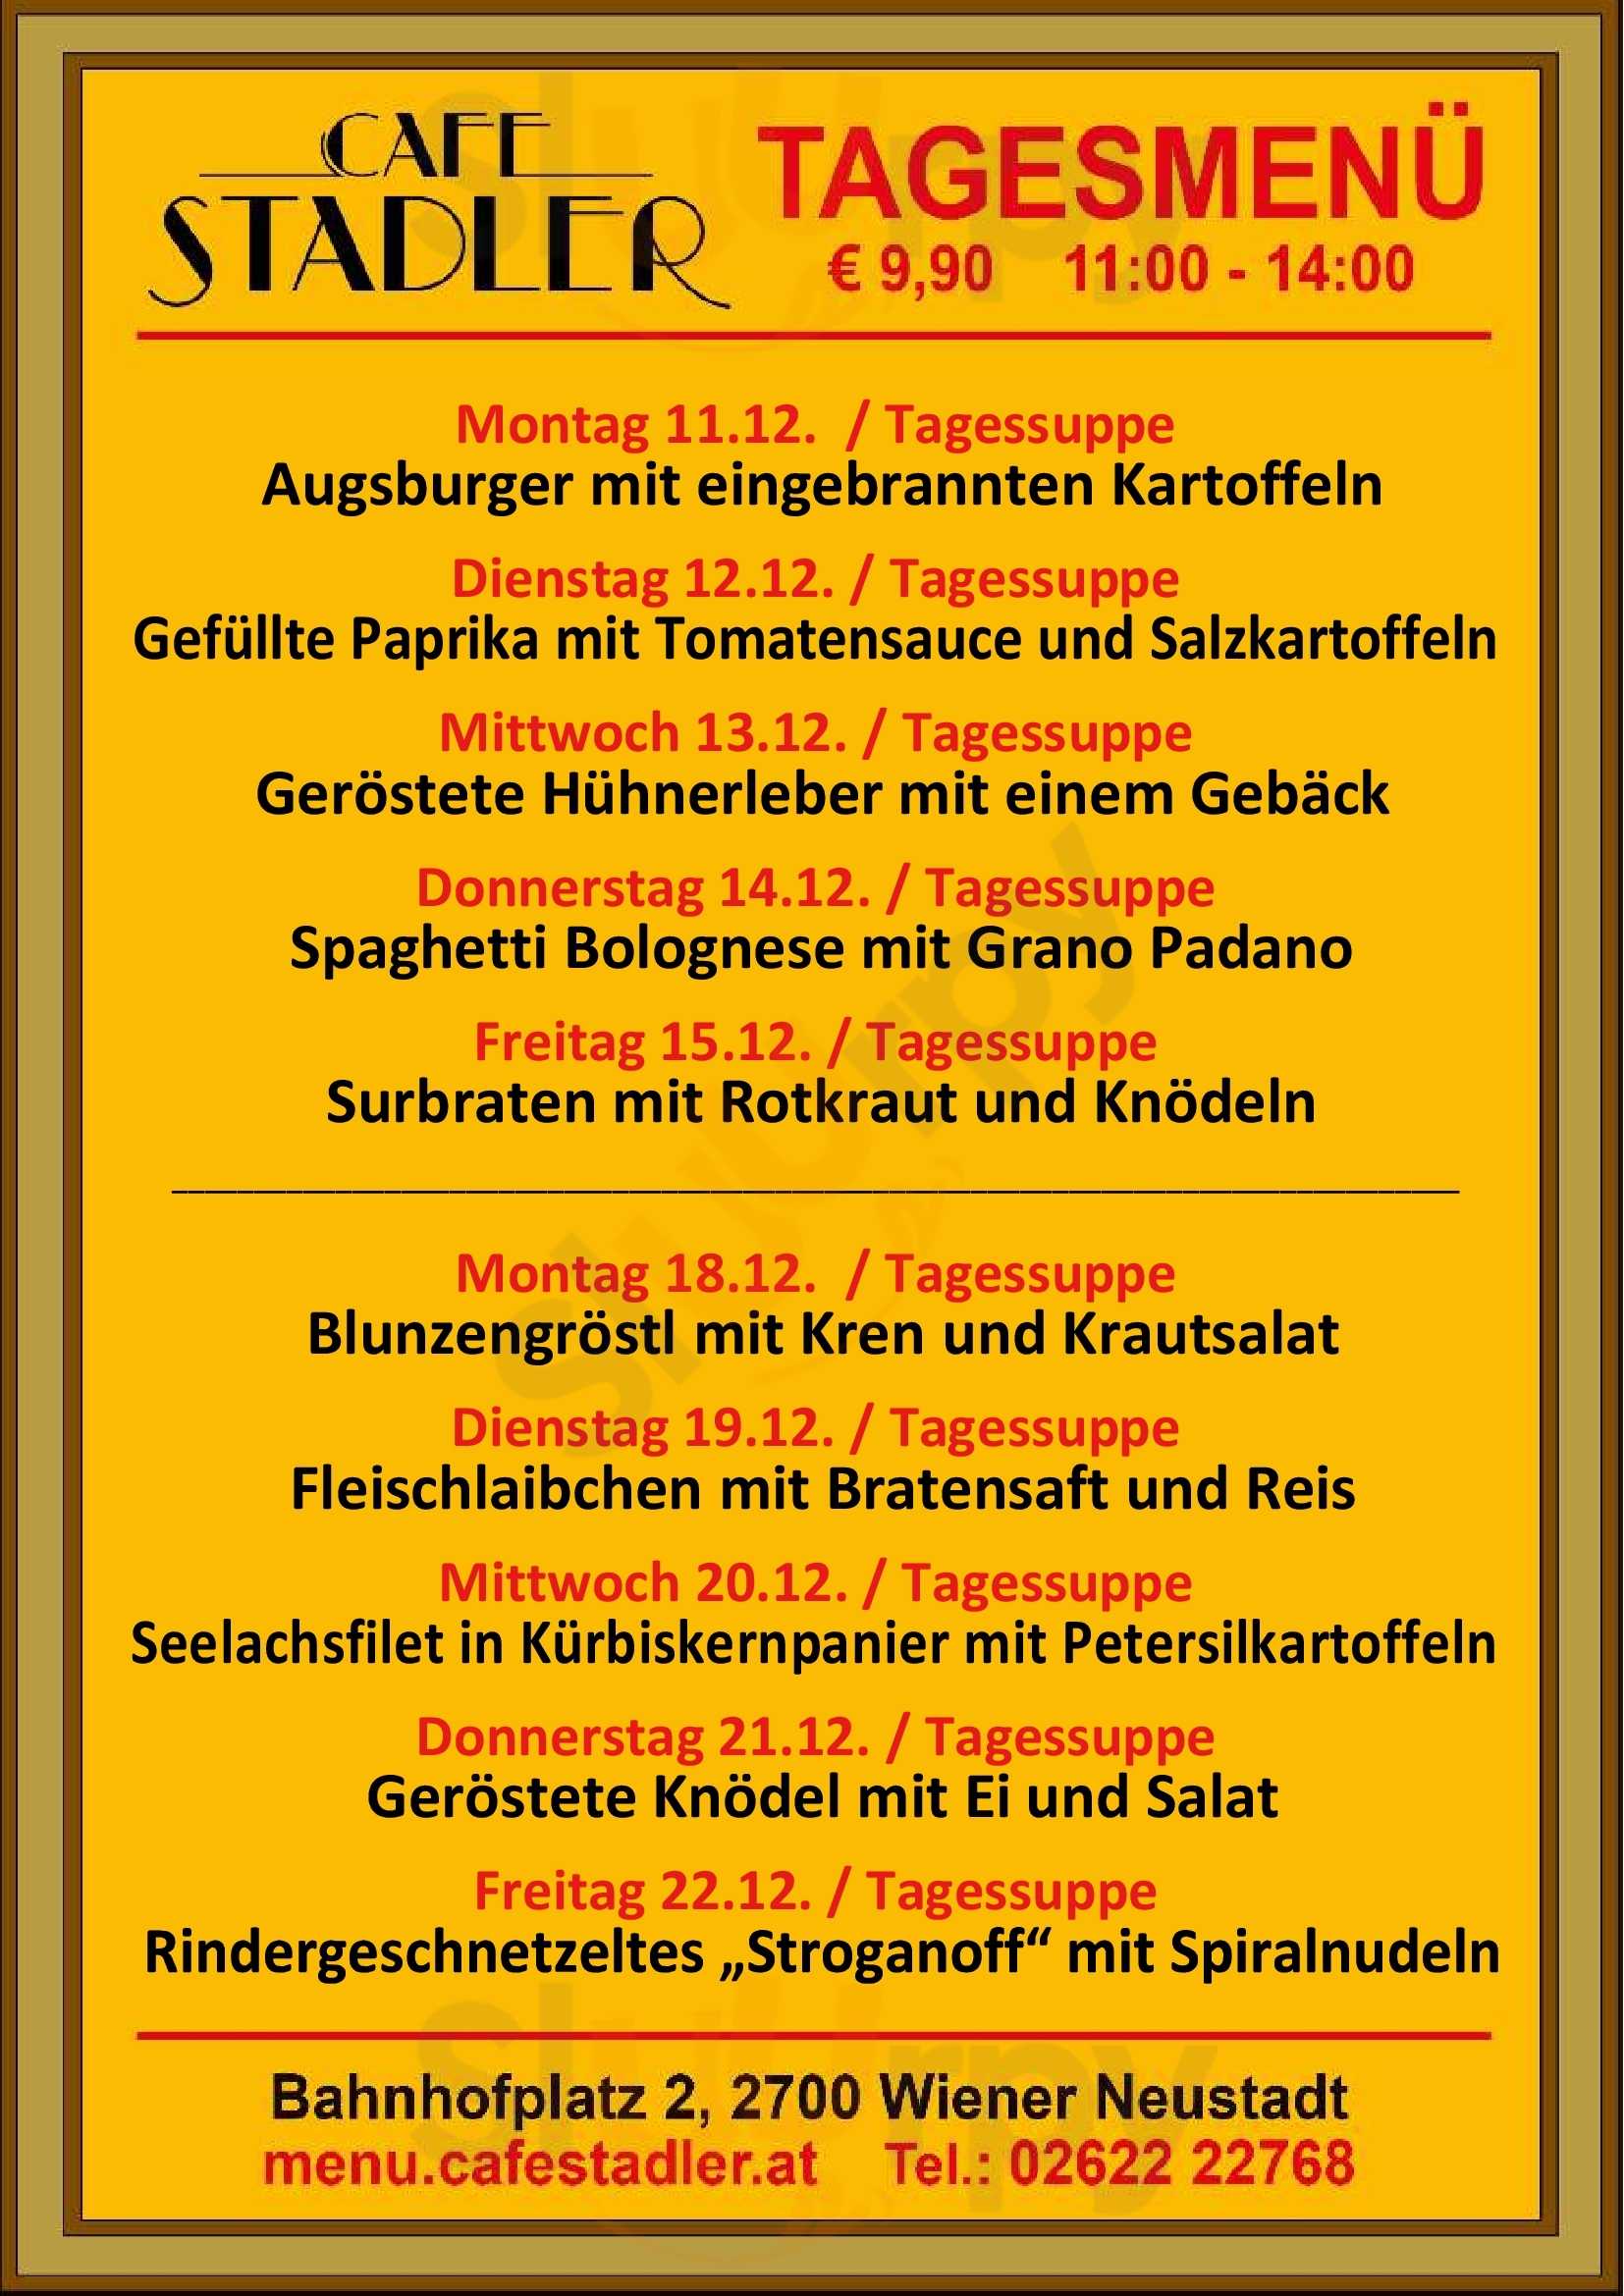 Cafe Stadler Wiener Neustadt Menu - 1